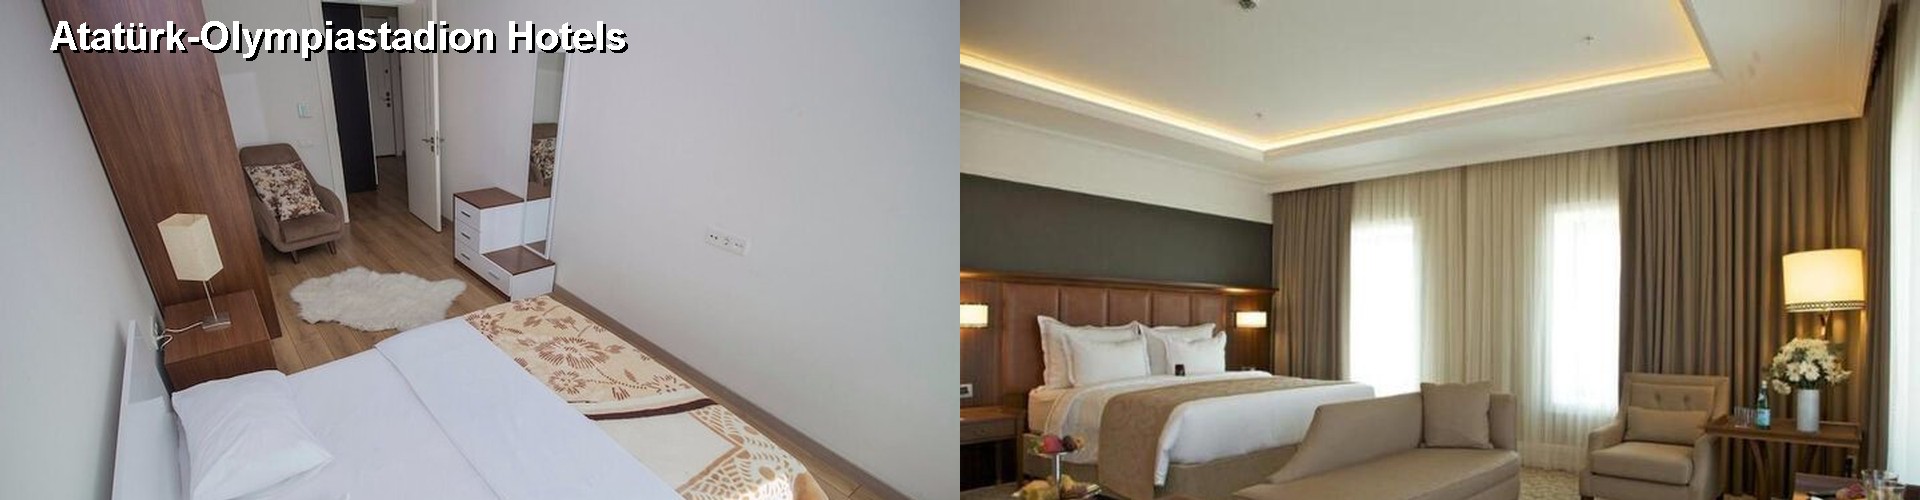 4 Best Hotels near Atatürk-Olympiastadion